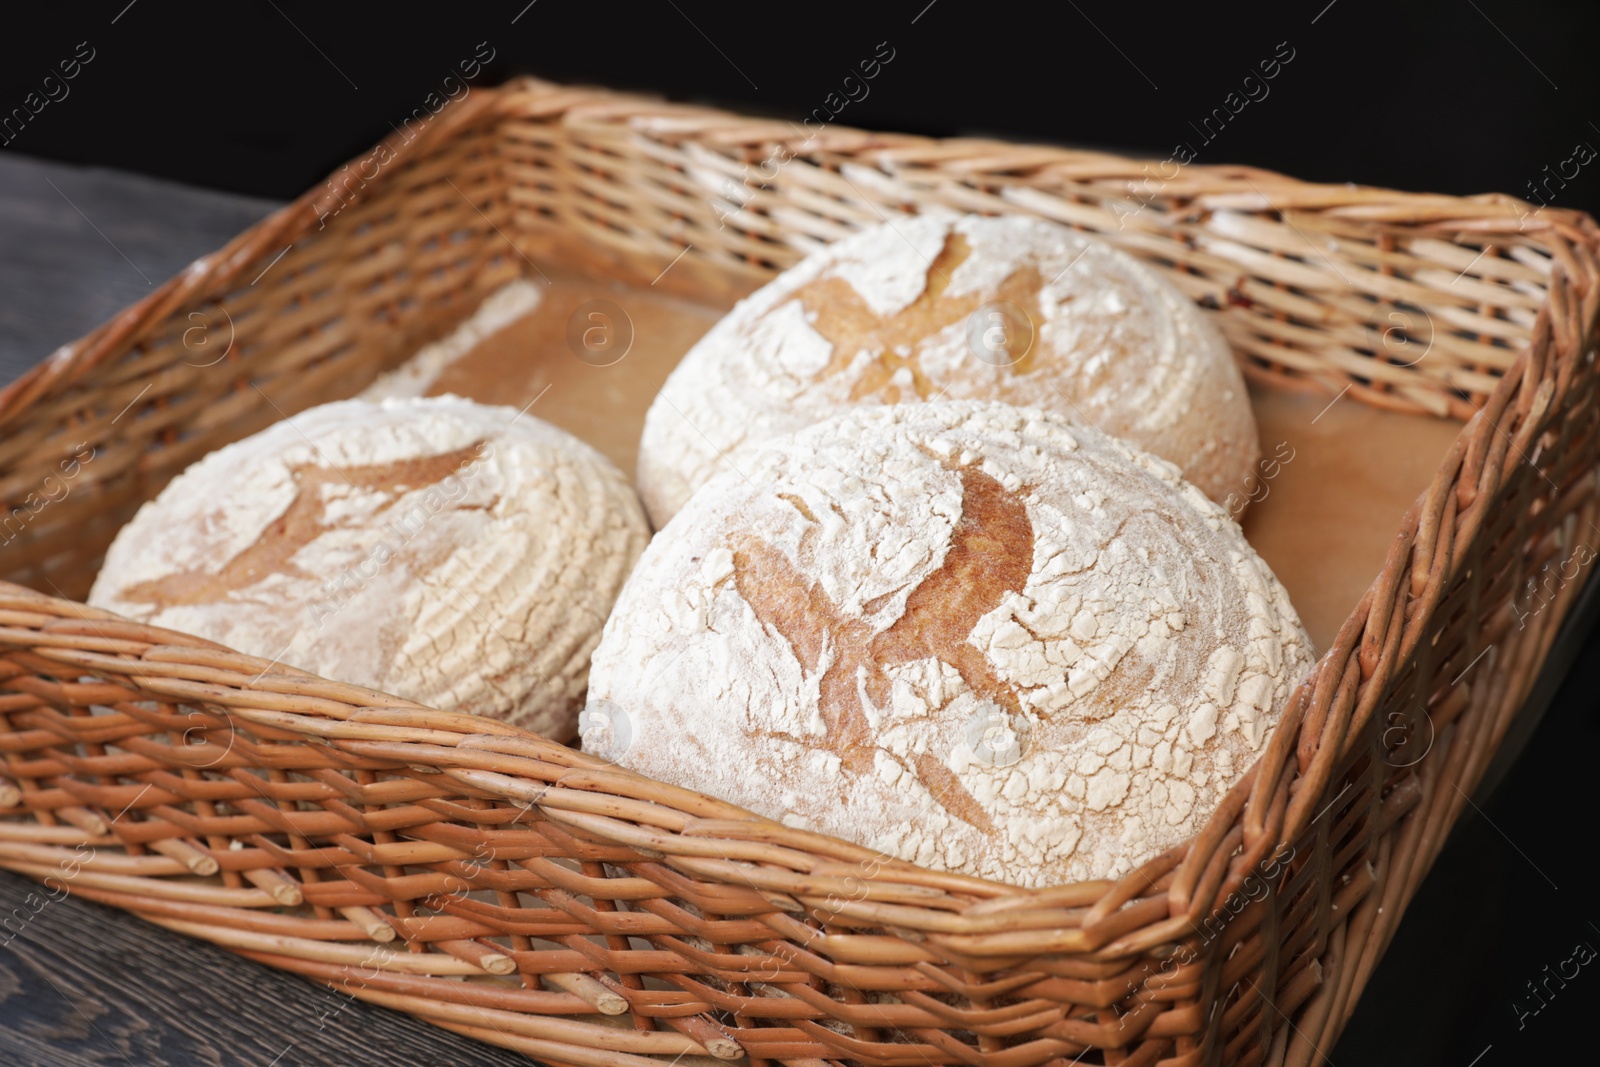 Photo of Freshly baked loaves of bread in wicker tray